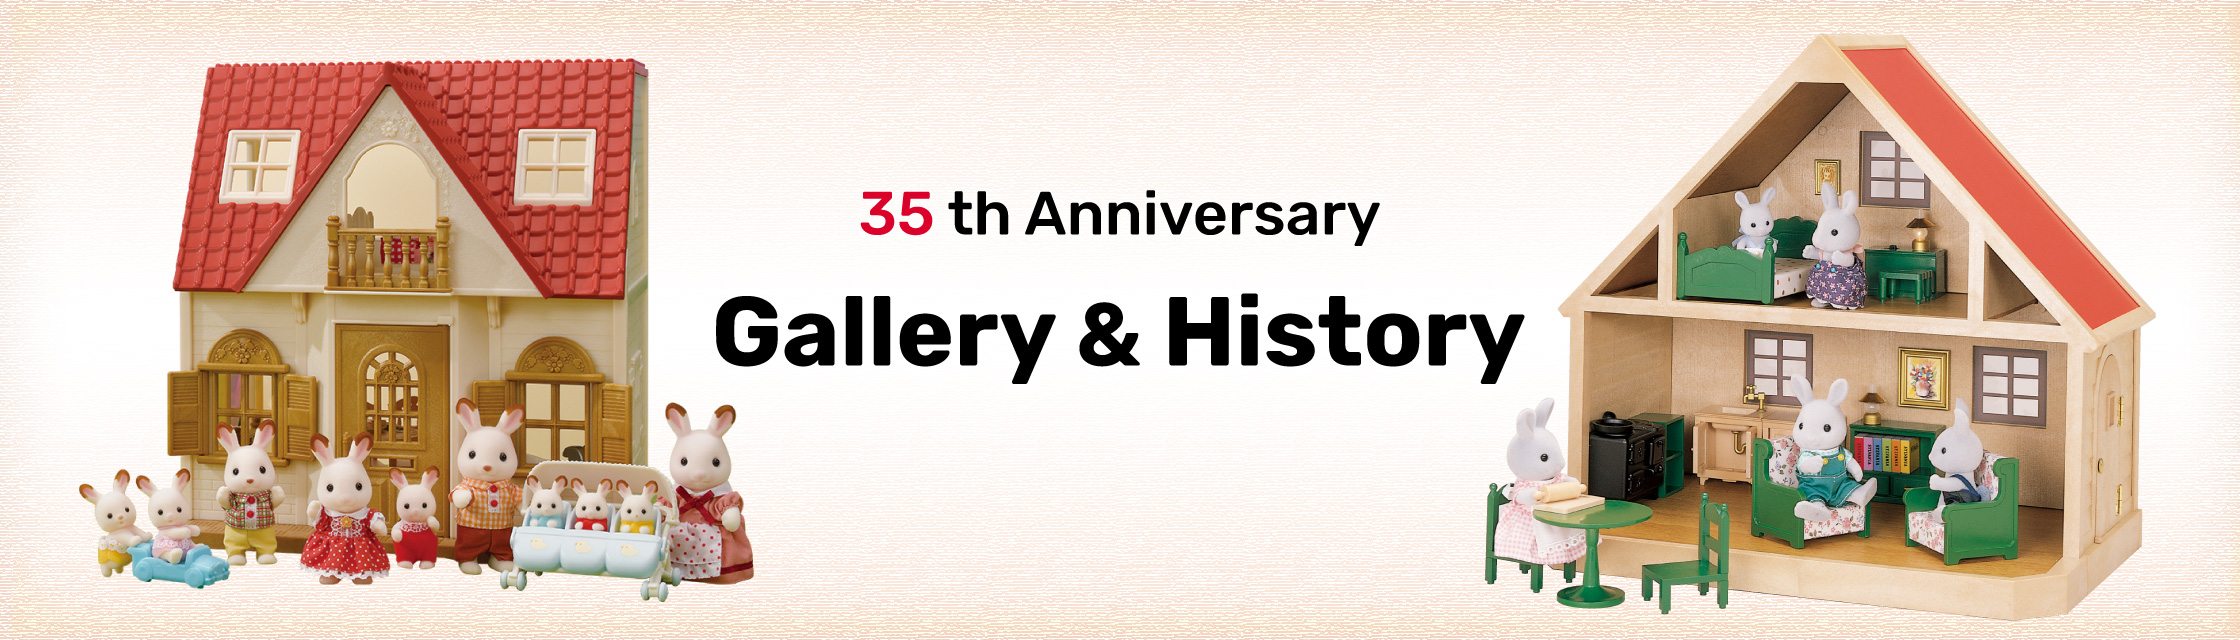 Gallery & History